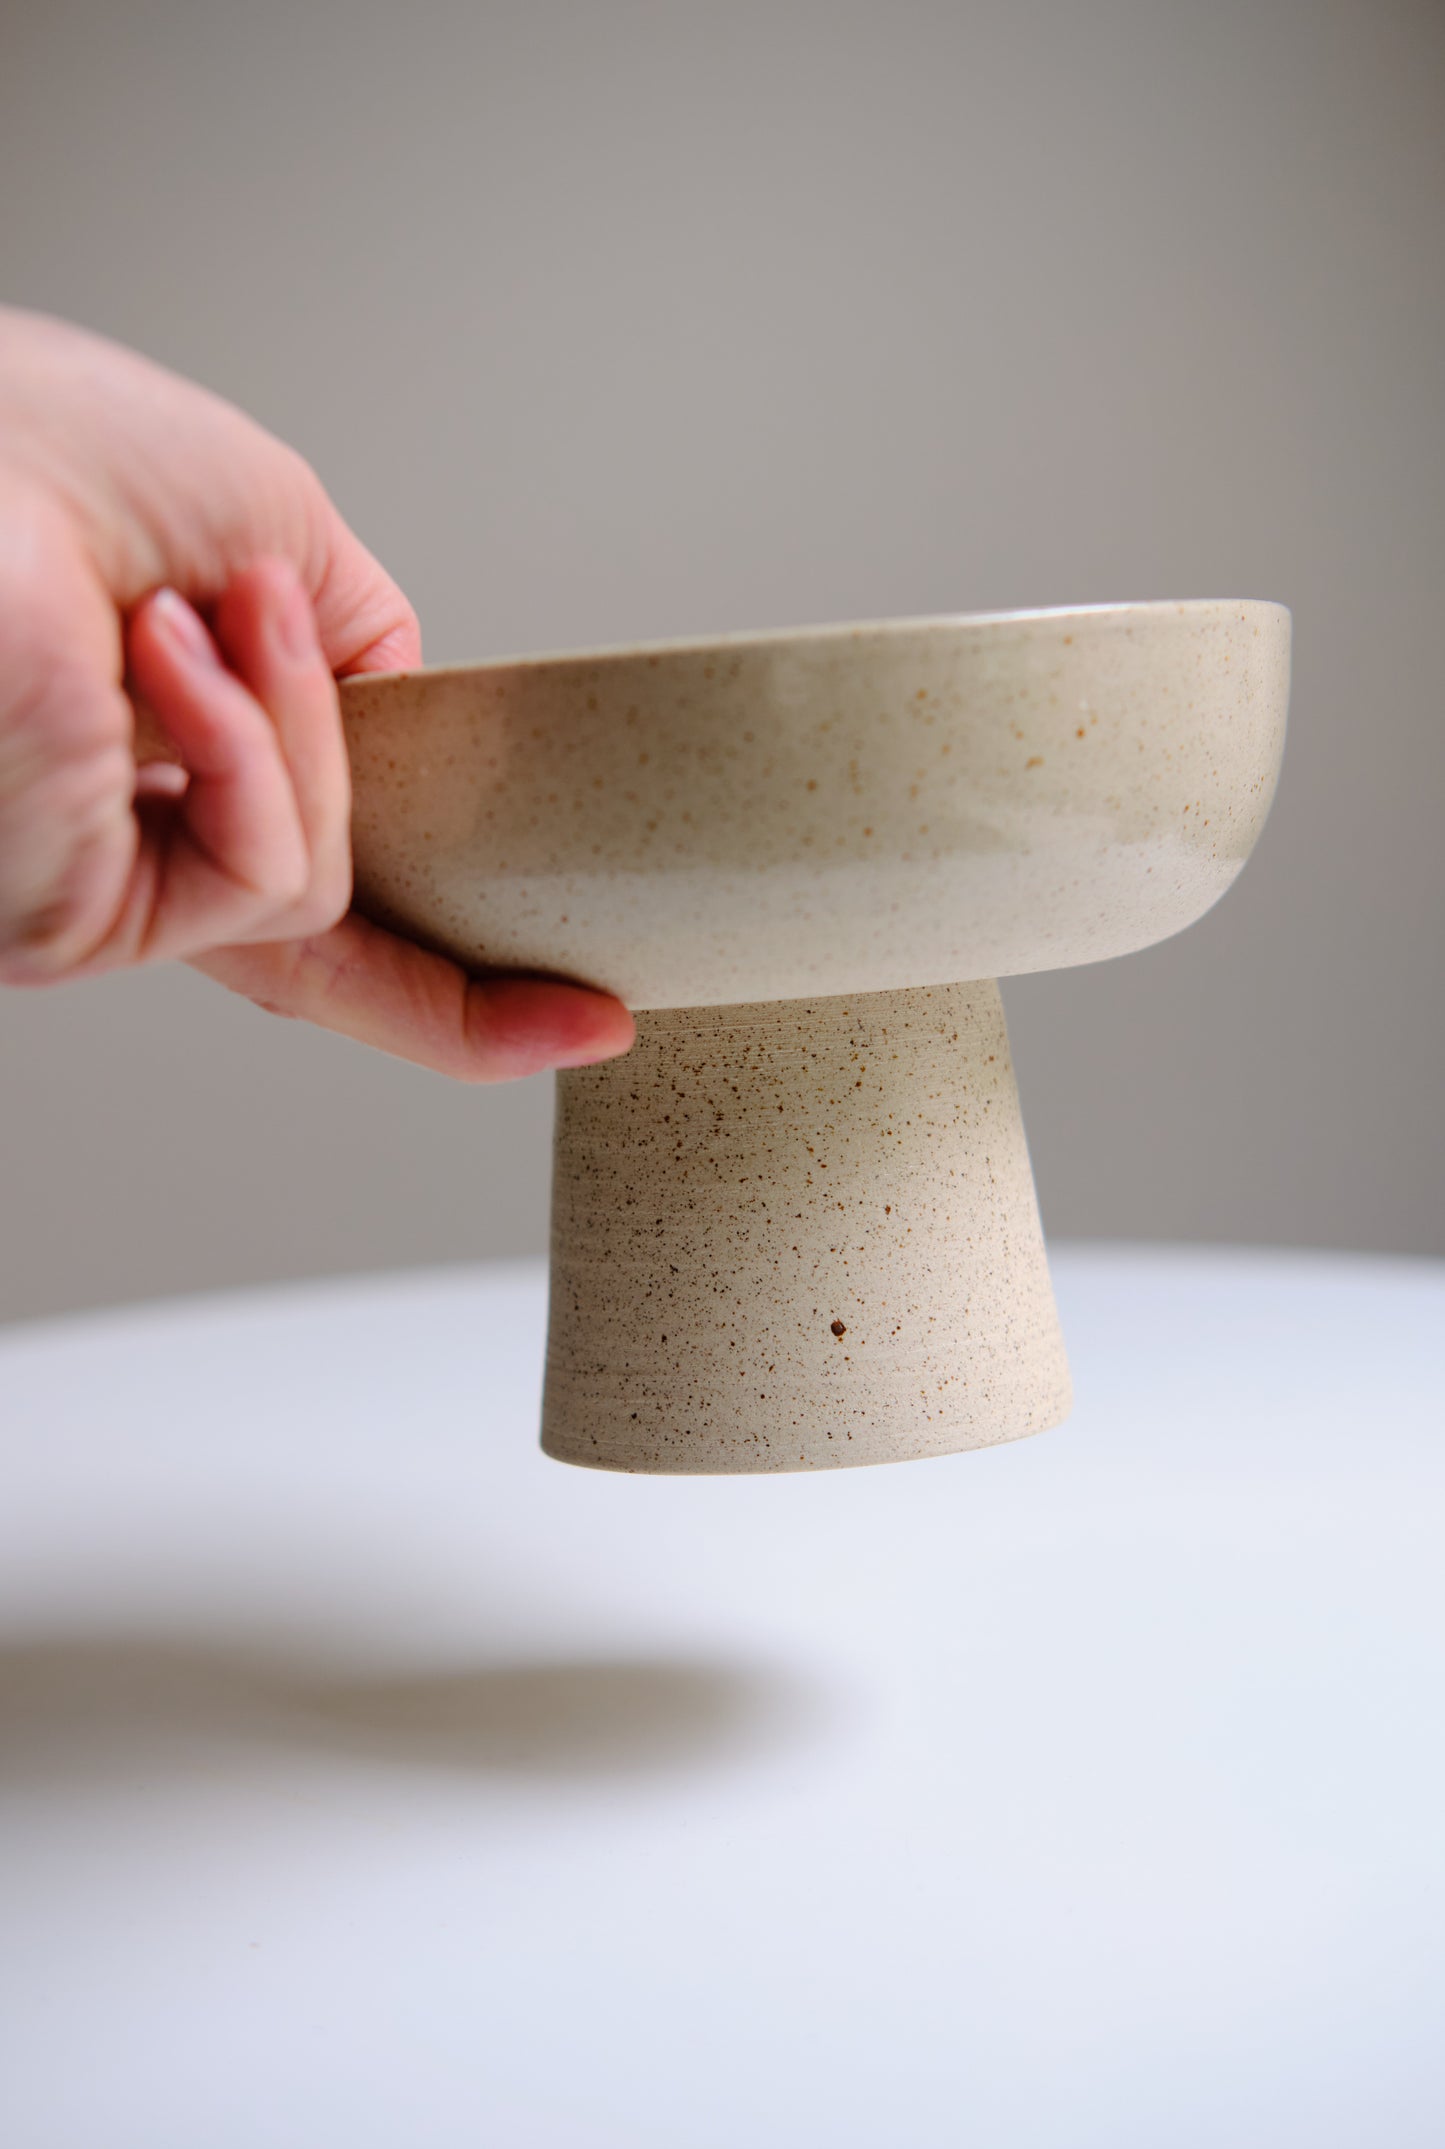 Pedestal bowl no. 29